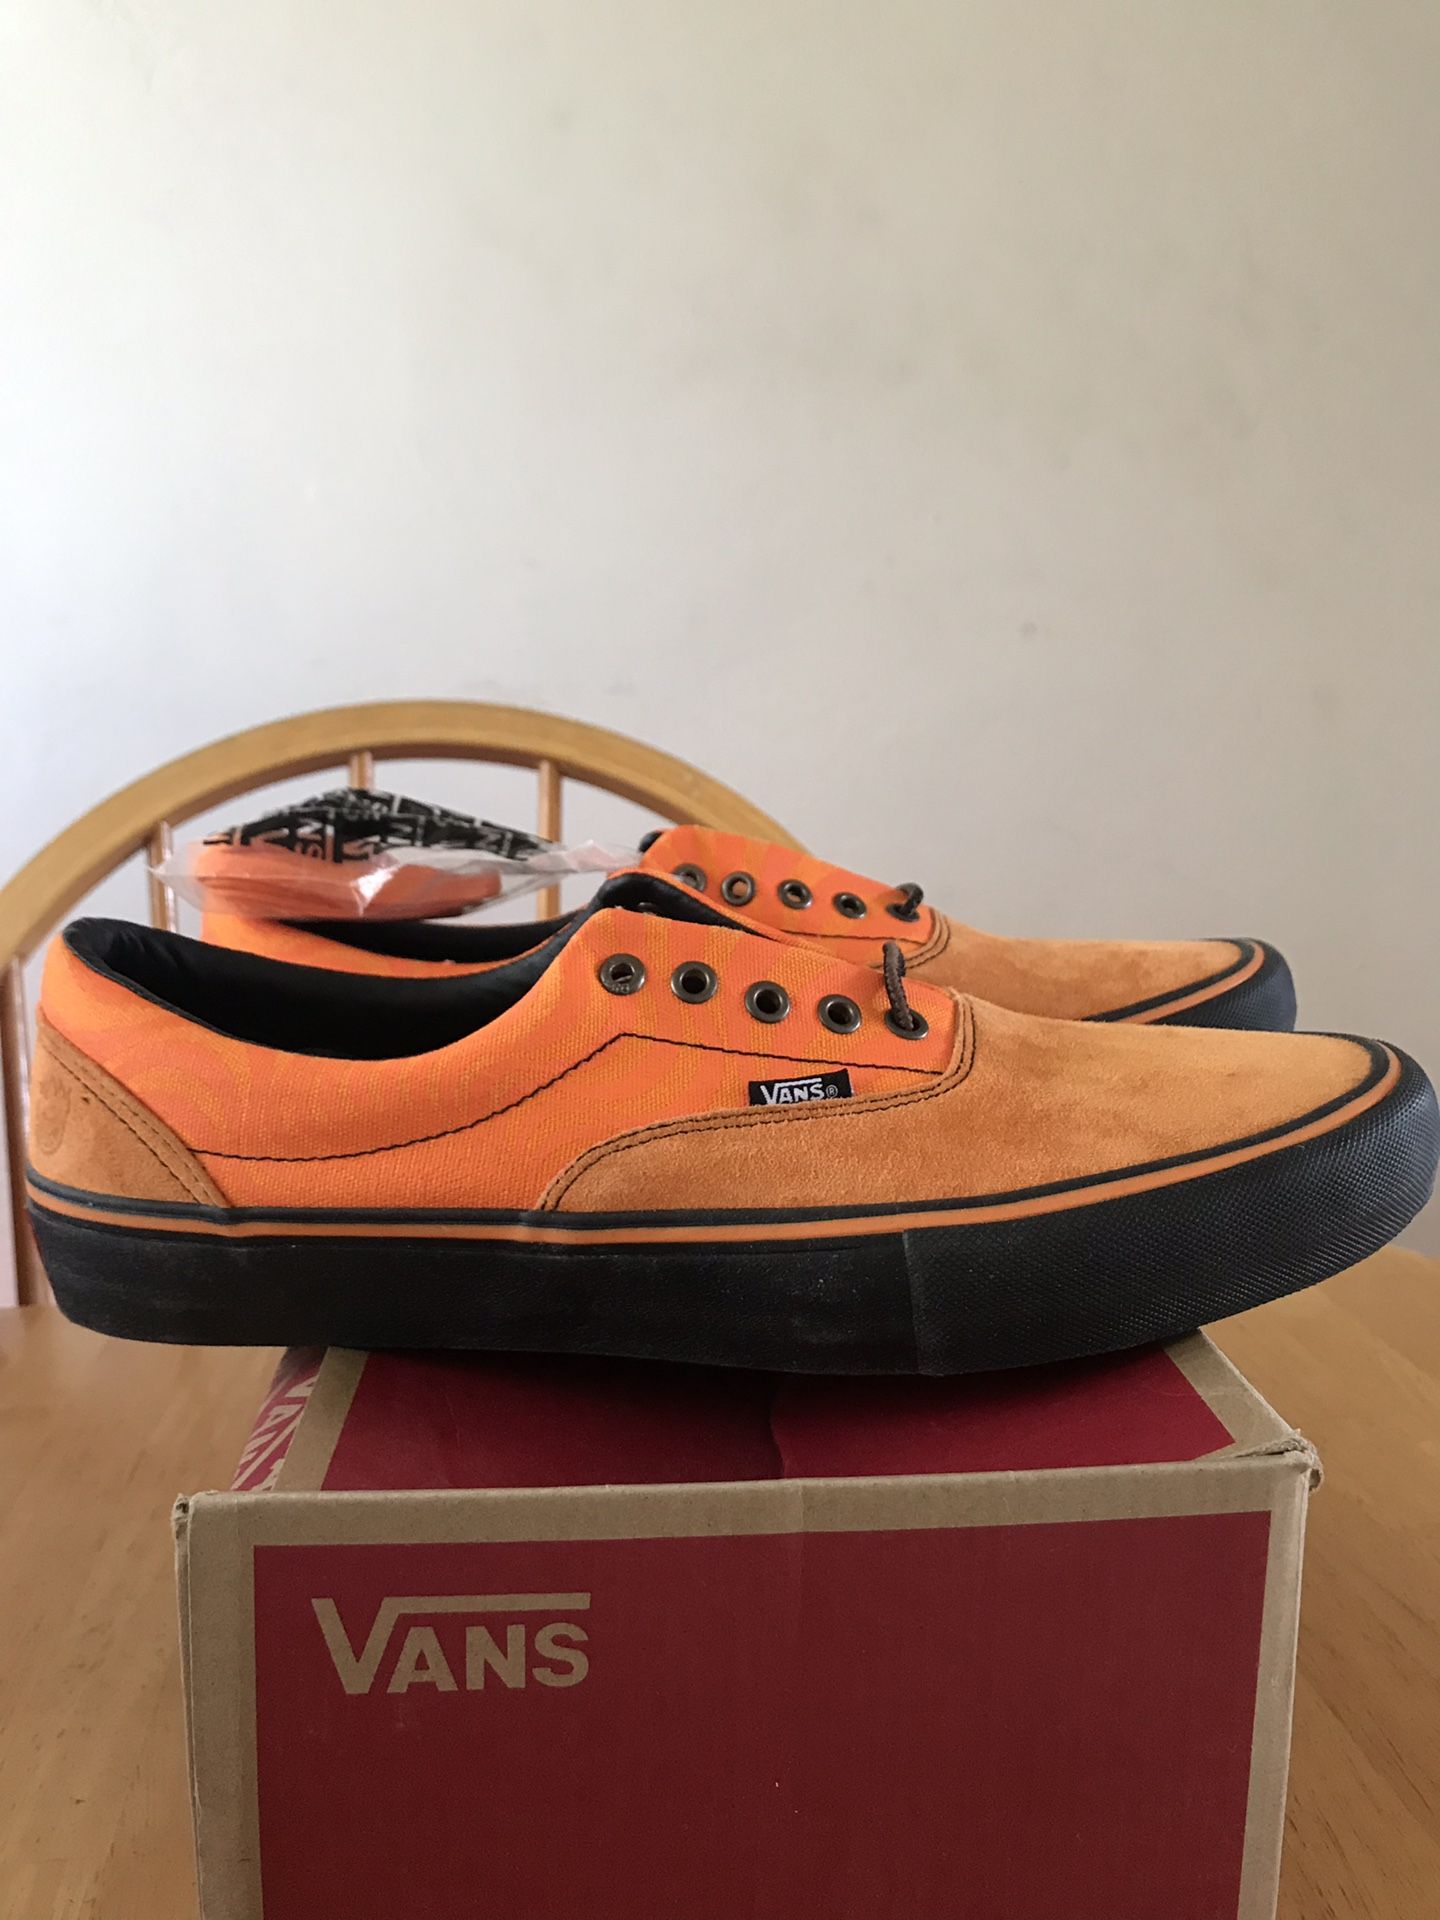 Brand new vans era pro spitfire skate skateboard shoes men’s size 13